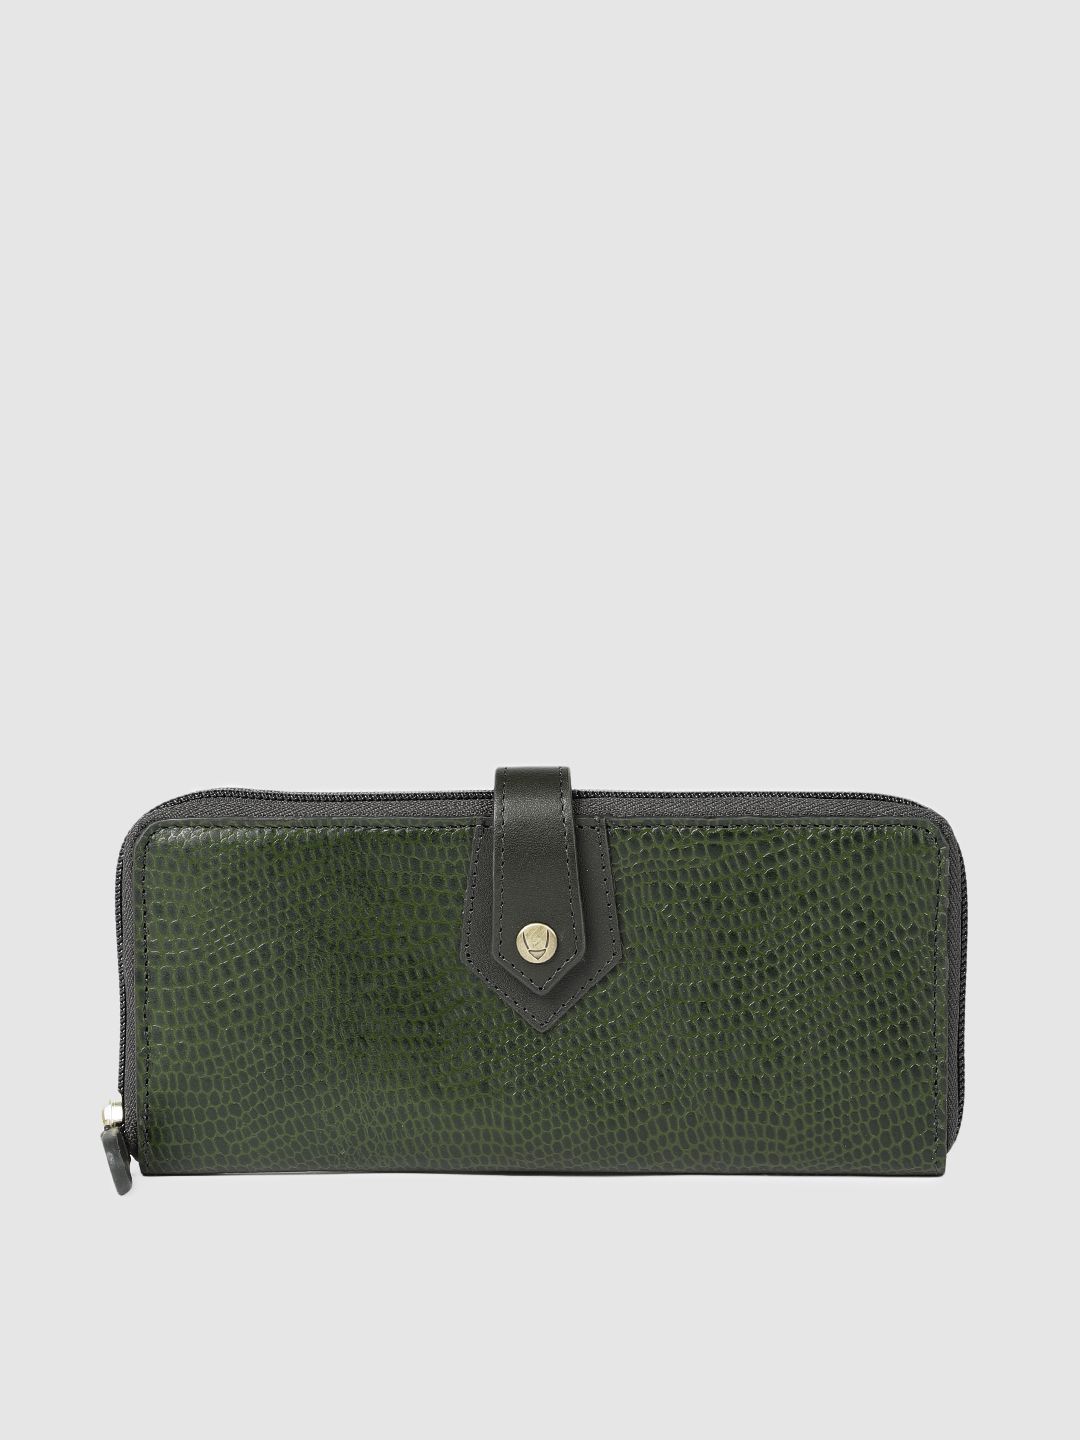 Hidesign Women Green Textured EE HONG KONG W2 Leather Zip Around Wallet Price in India